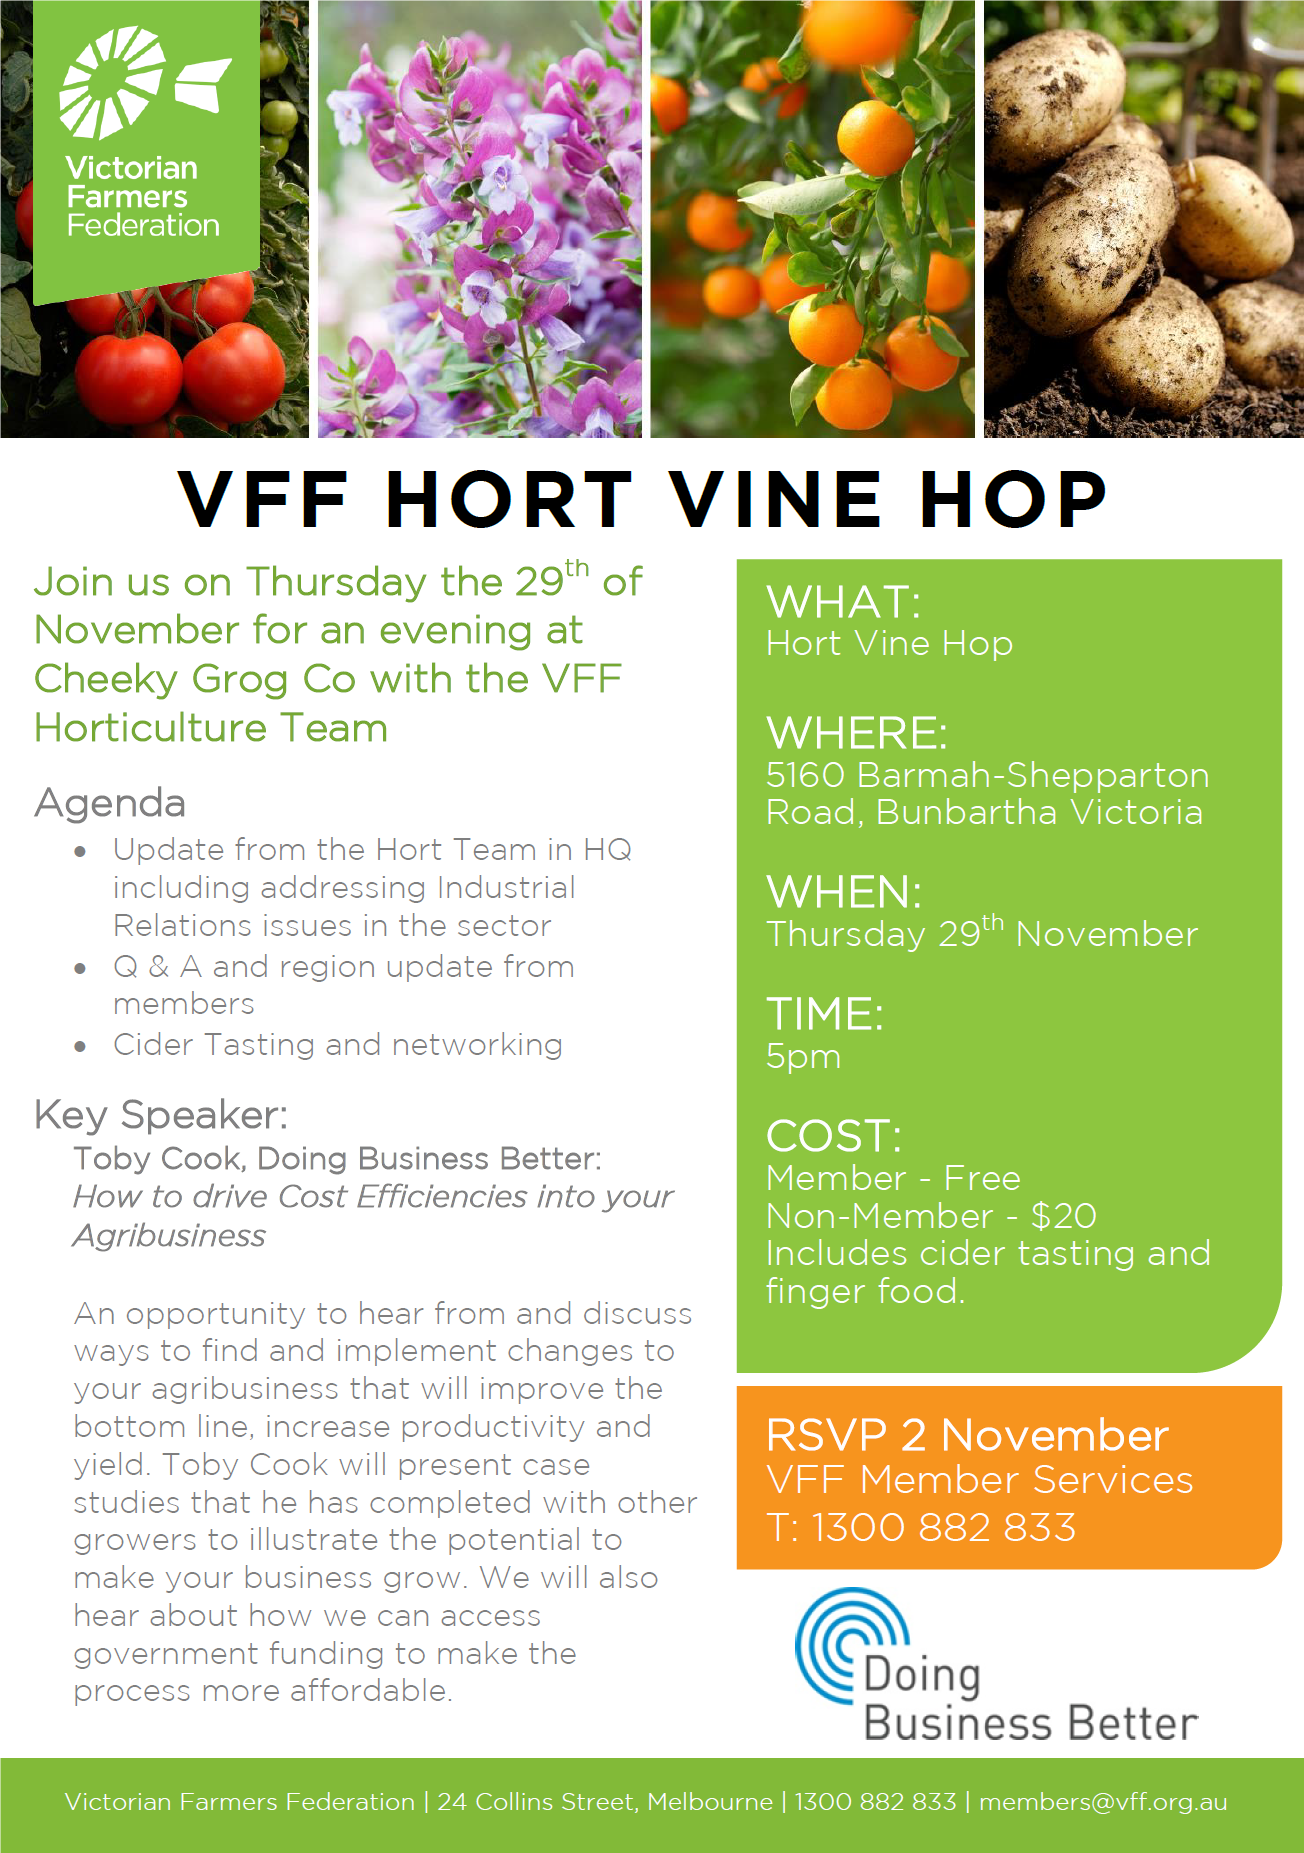 VFF Hort Vine Hop- Shepparton: Thursday 29th Nov 5pm at 'Cheeky Grog Co' 5160 Barmah-Shepparton Road, Bunbartha